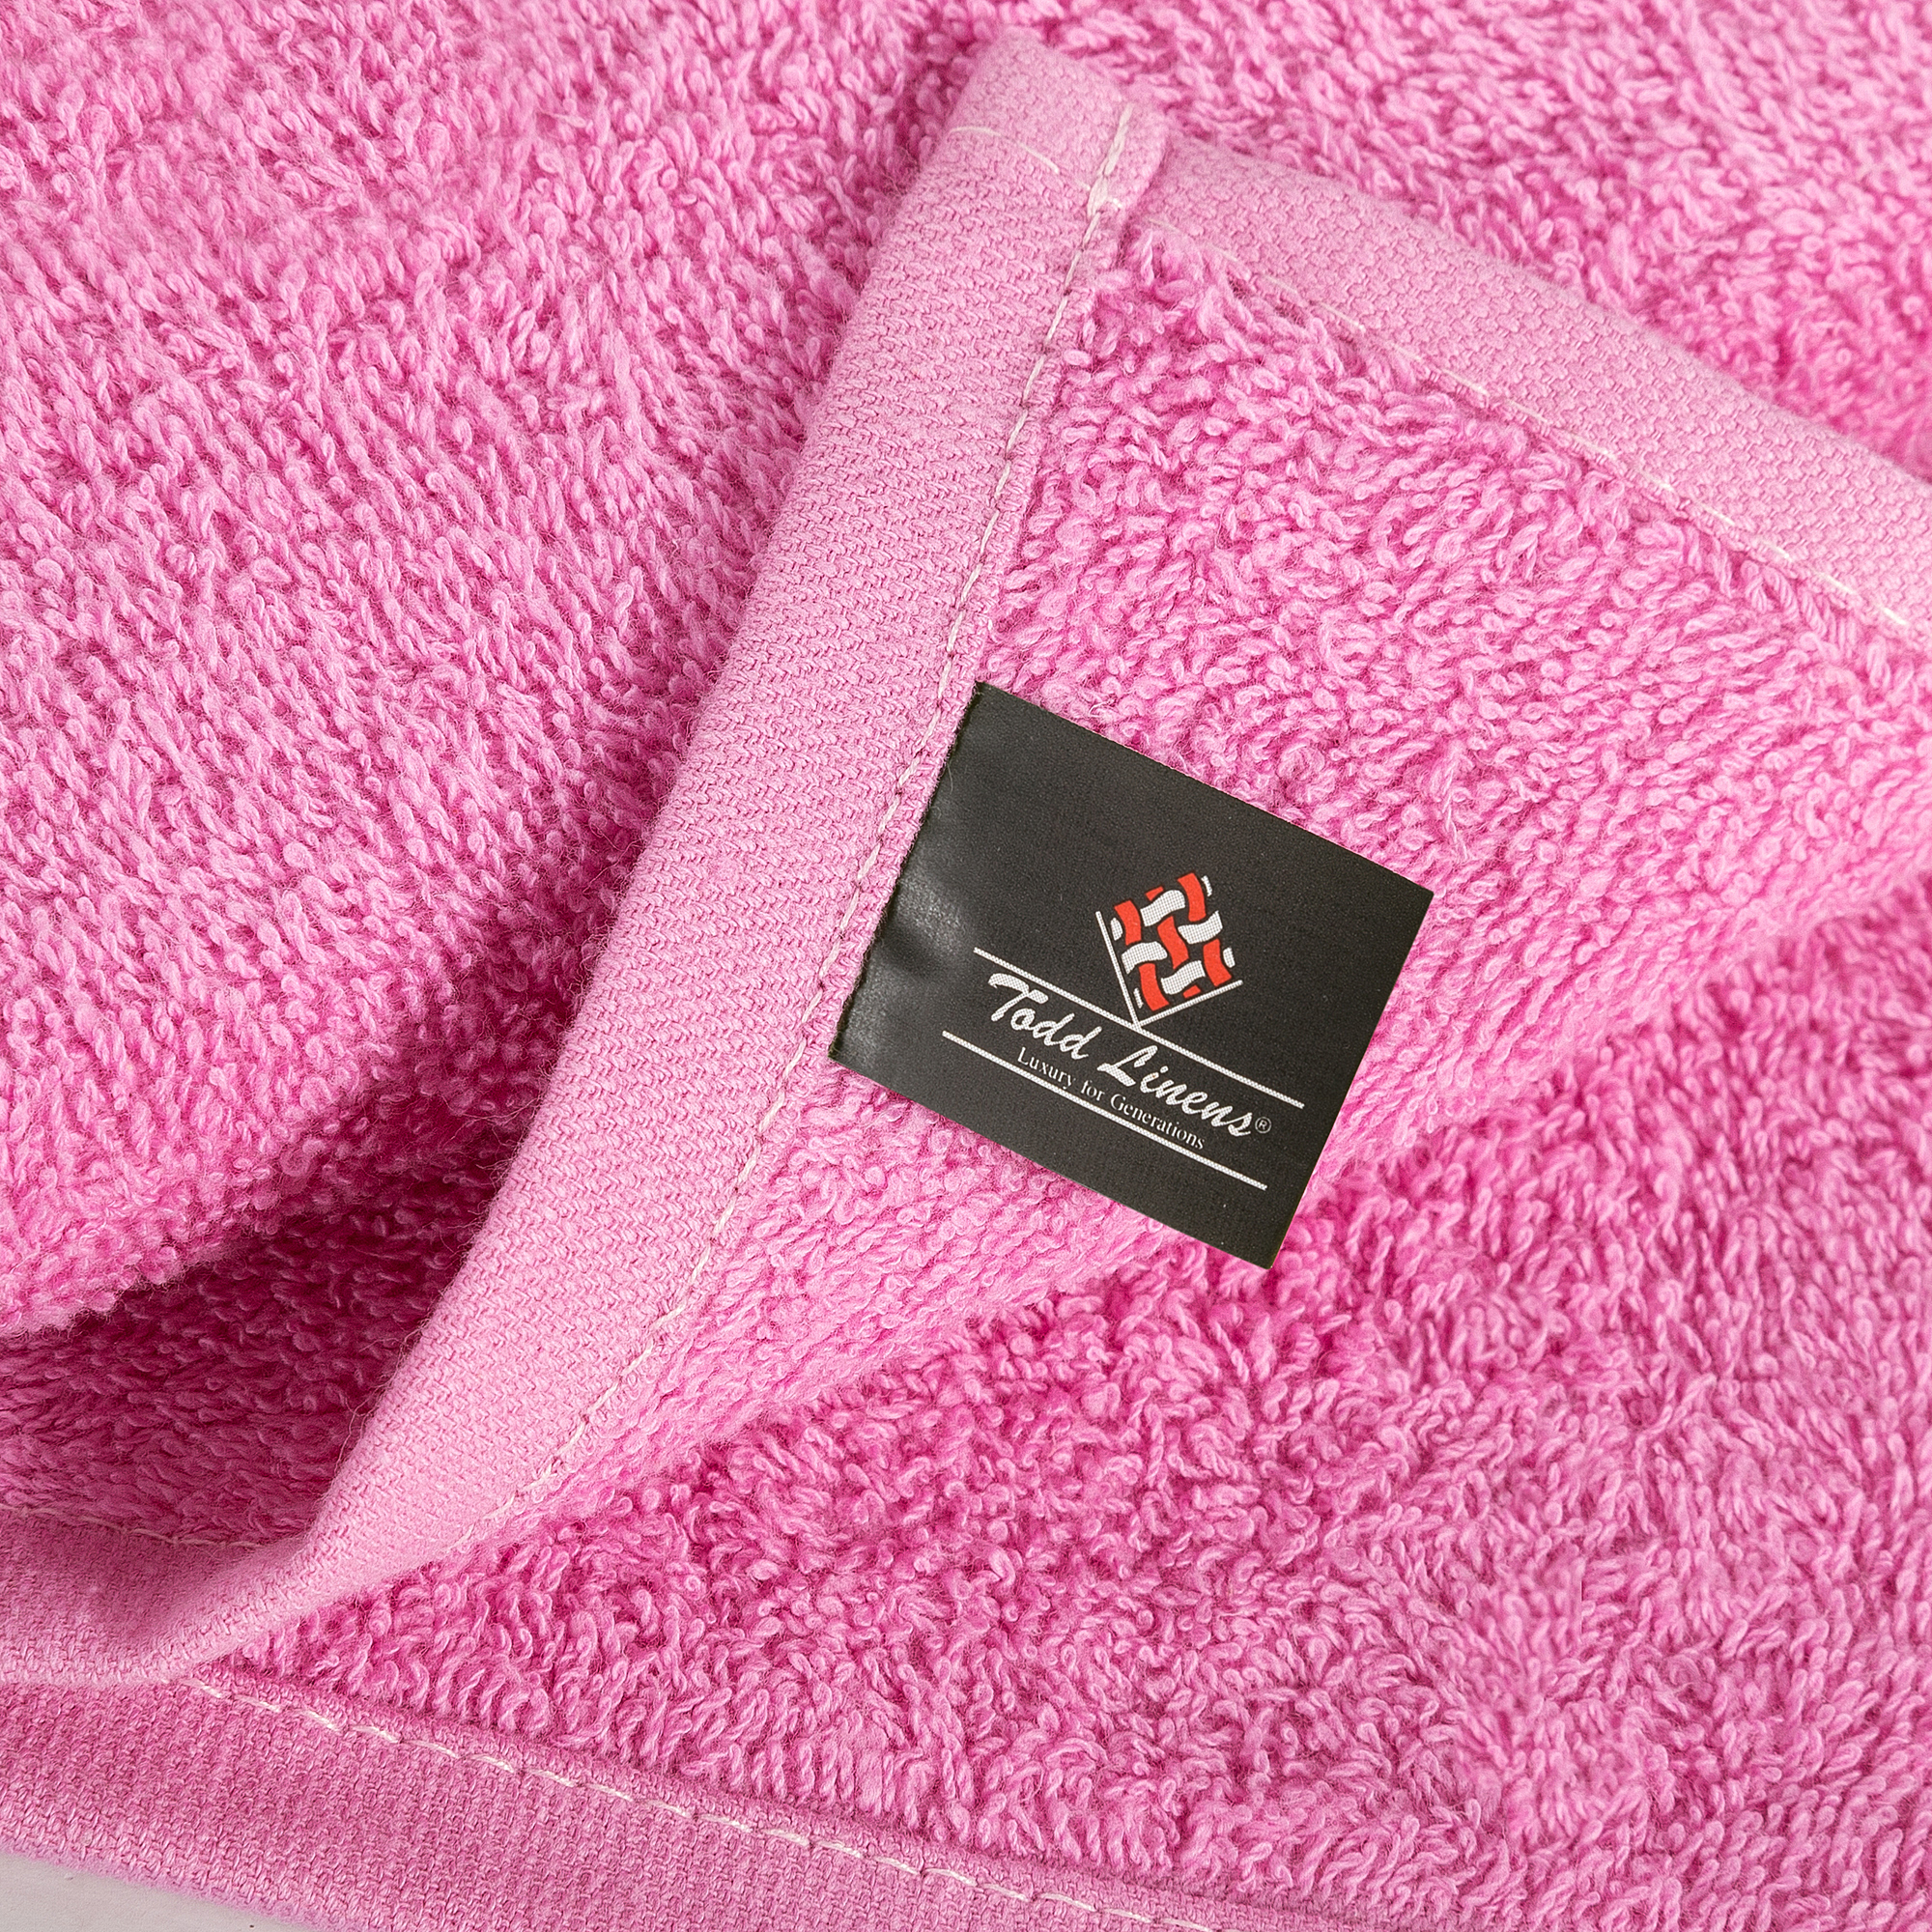 Bale Set 24pcs Fuchsia Pink Plain Face Towel